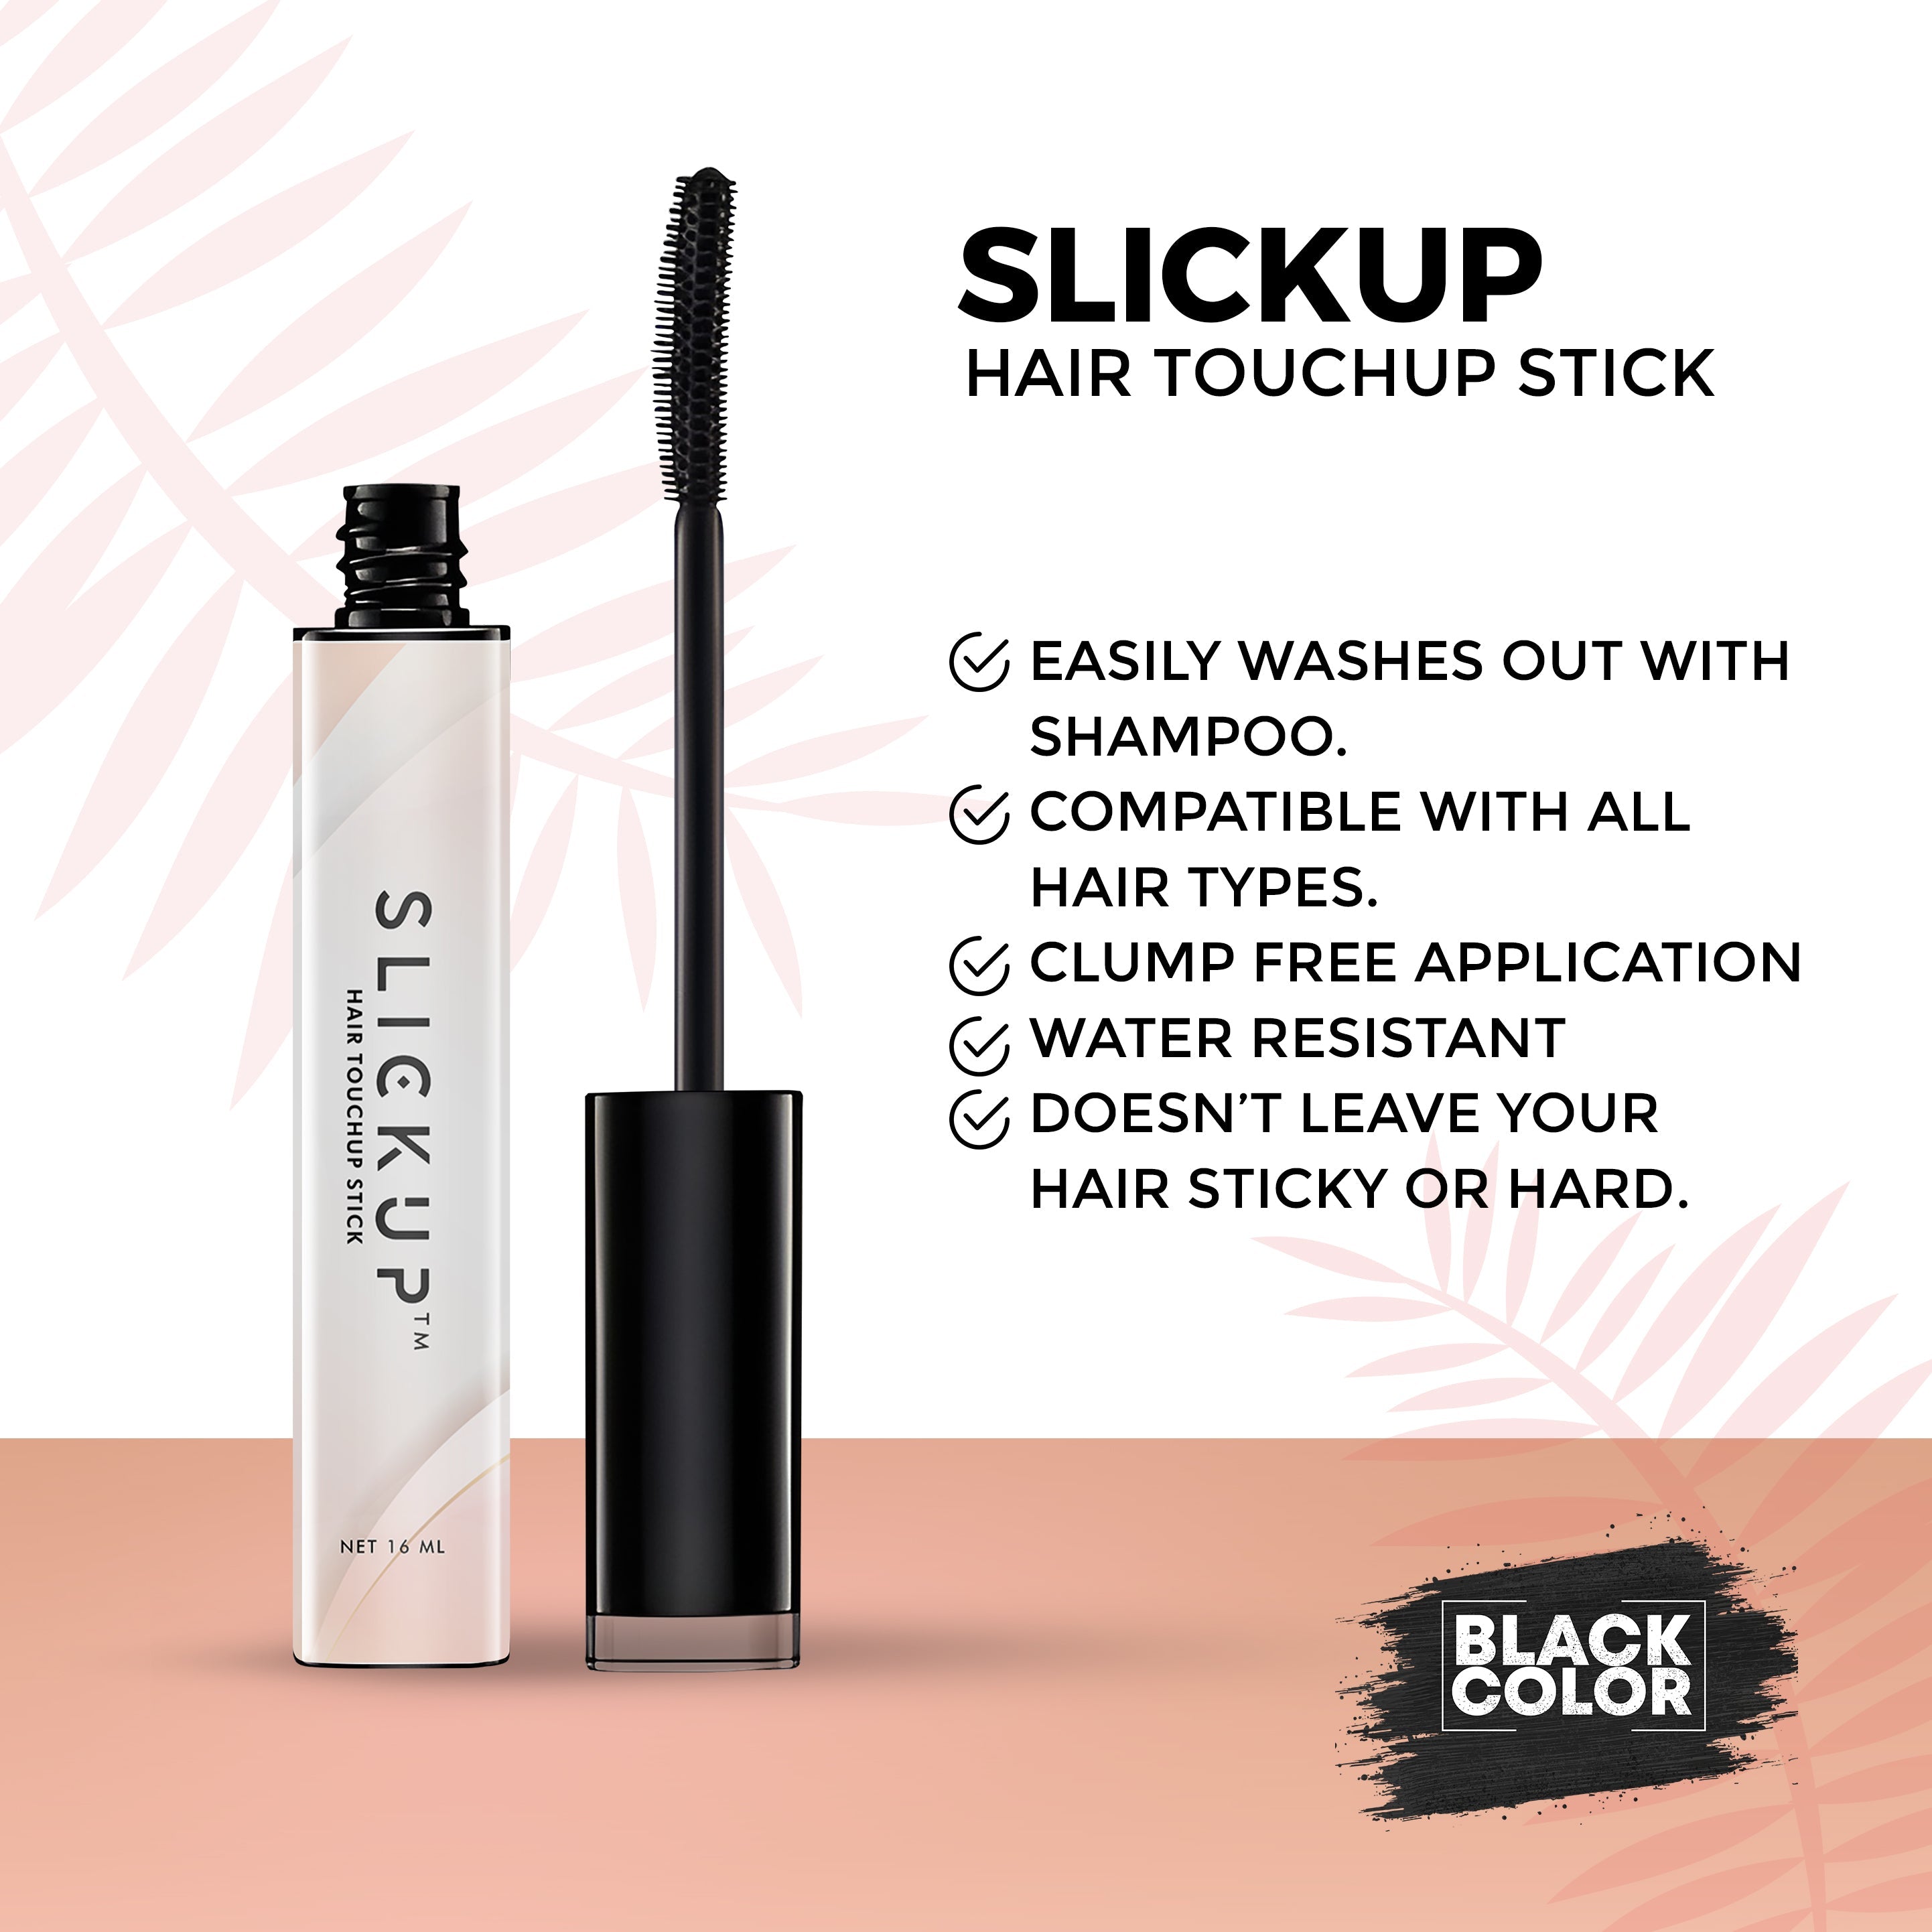 Slickup Hair Touchup Stick